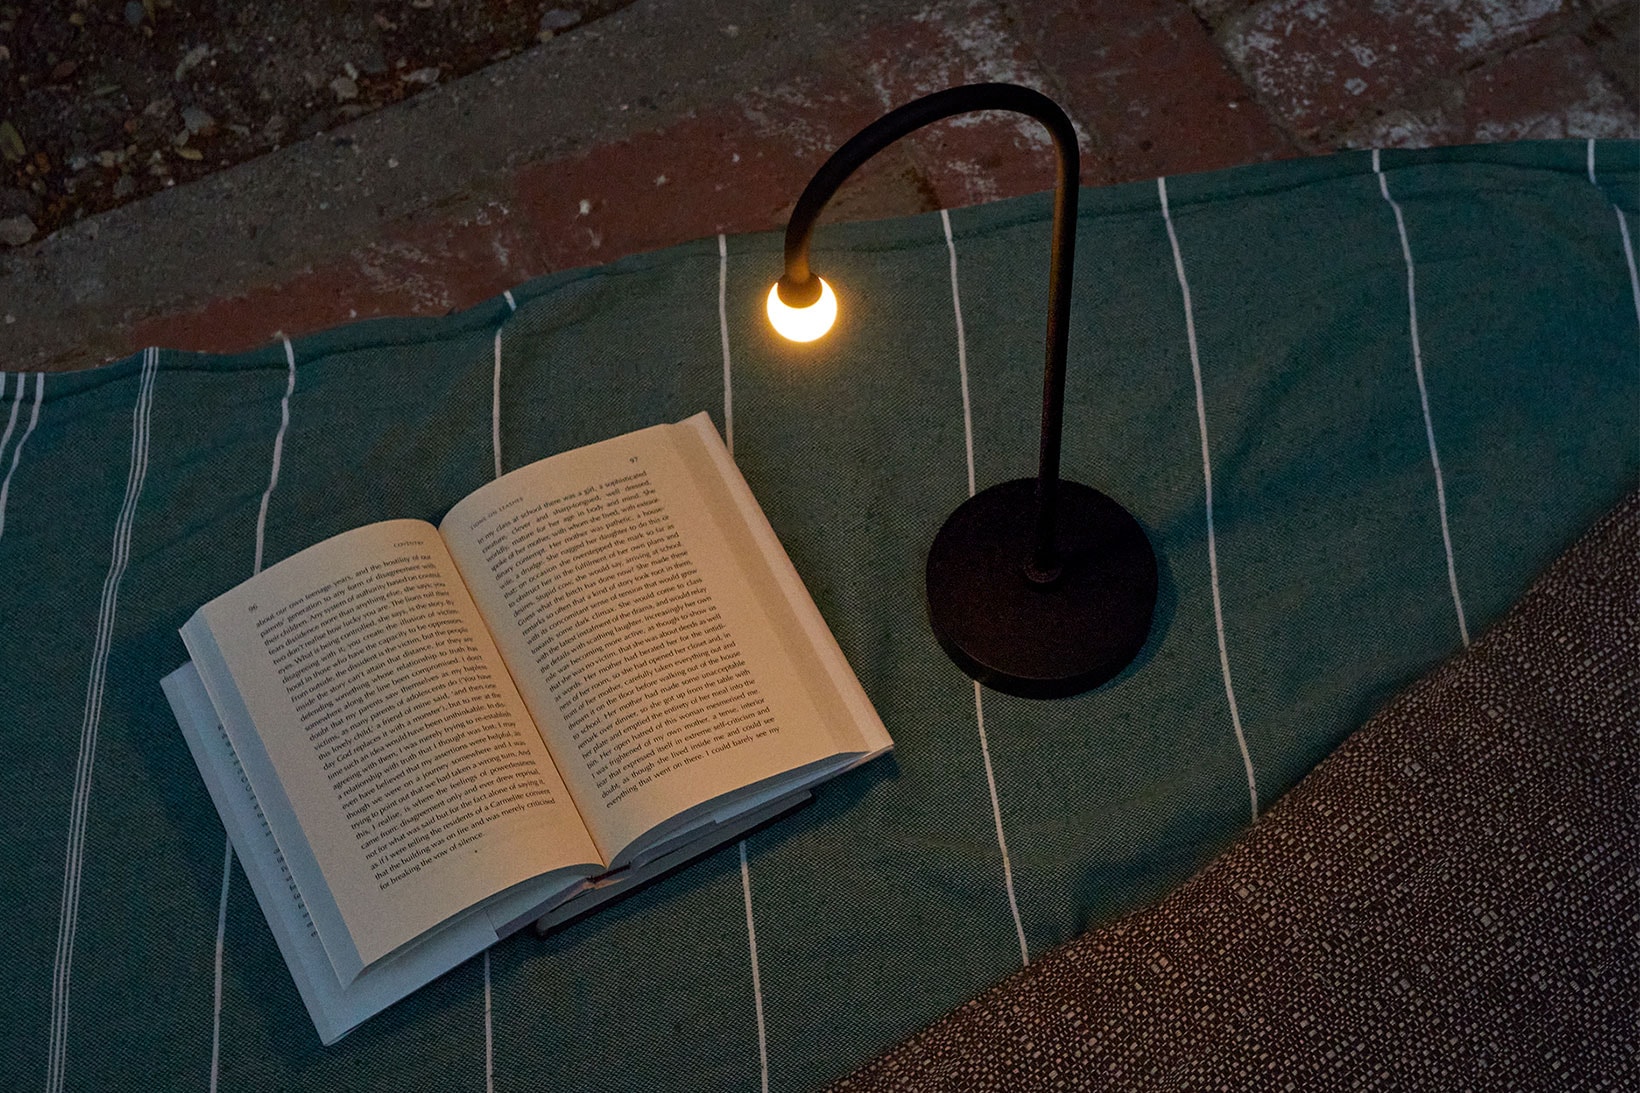 arca portable lamp philippe malouin matter made led light minimalist home design price 